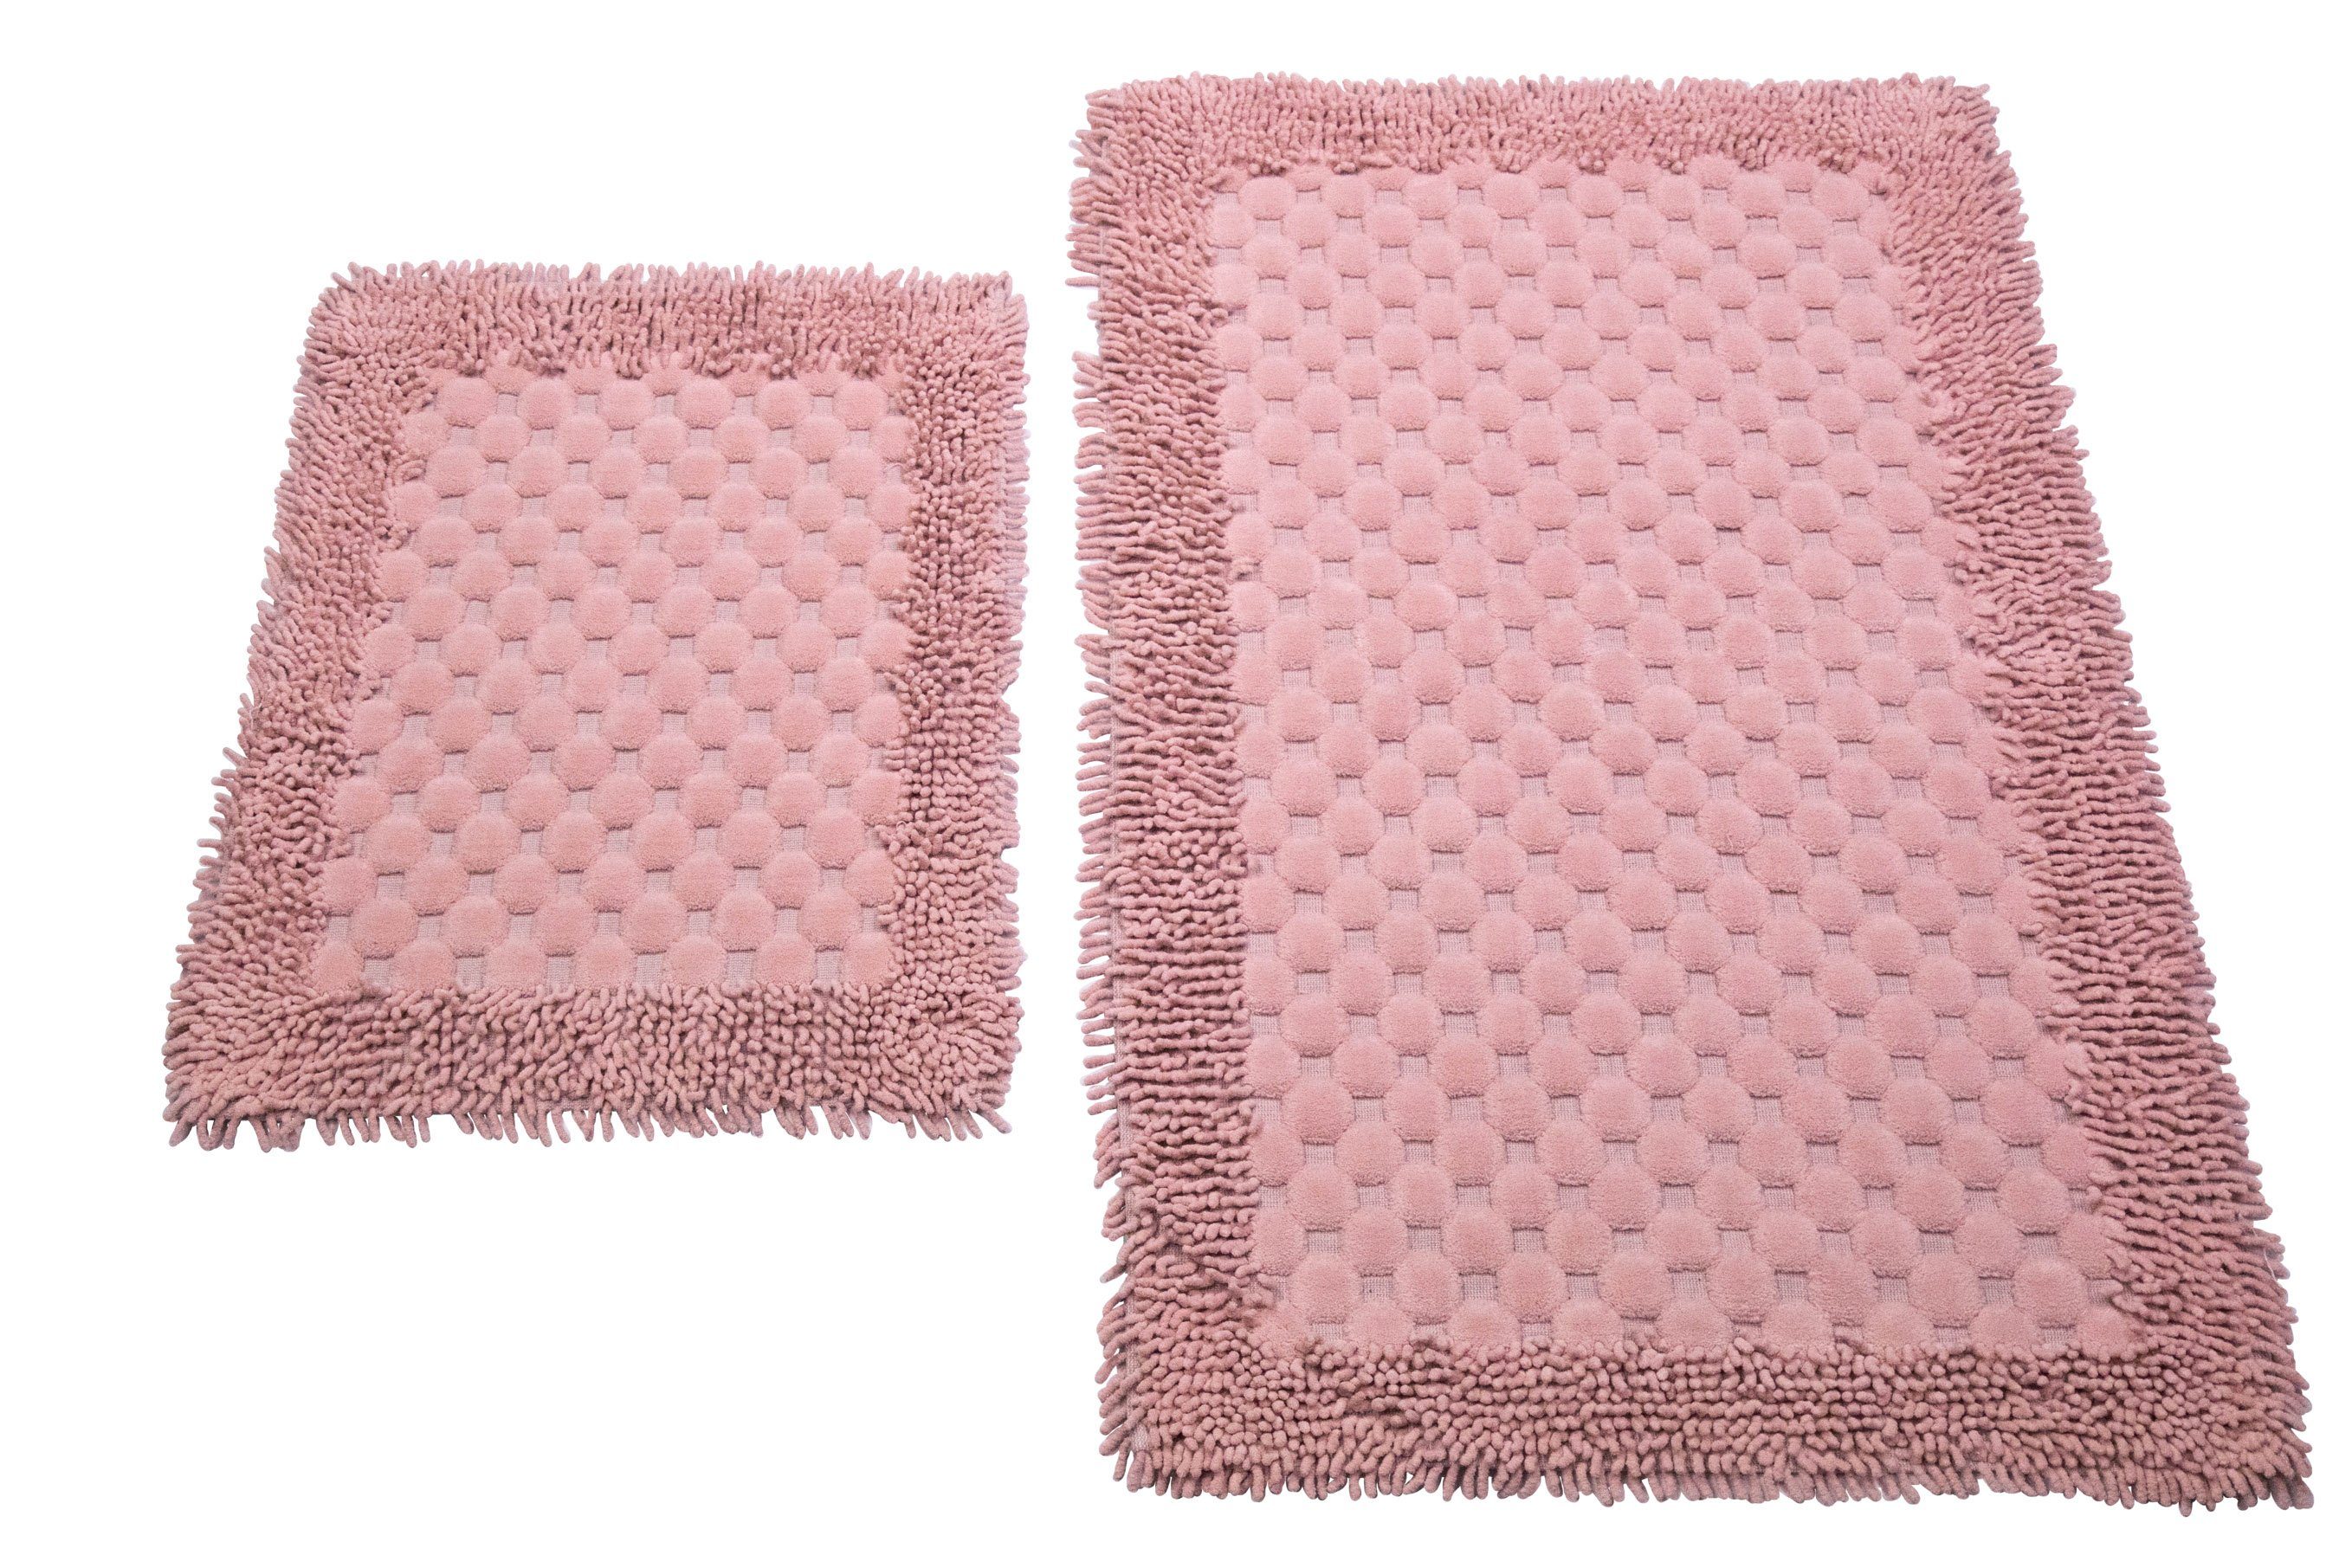 Kreis-Muster Set Oval, 2-teilig - waschbar Teppich-Traum, rosa, Badezimmerteppich waschbar Höhe: Teppich 7,5 mm, rutschfest